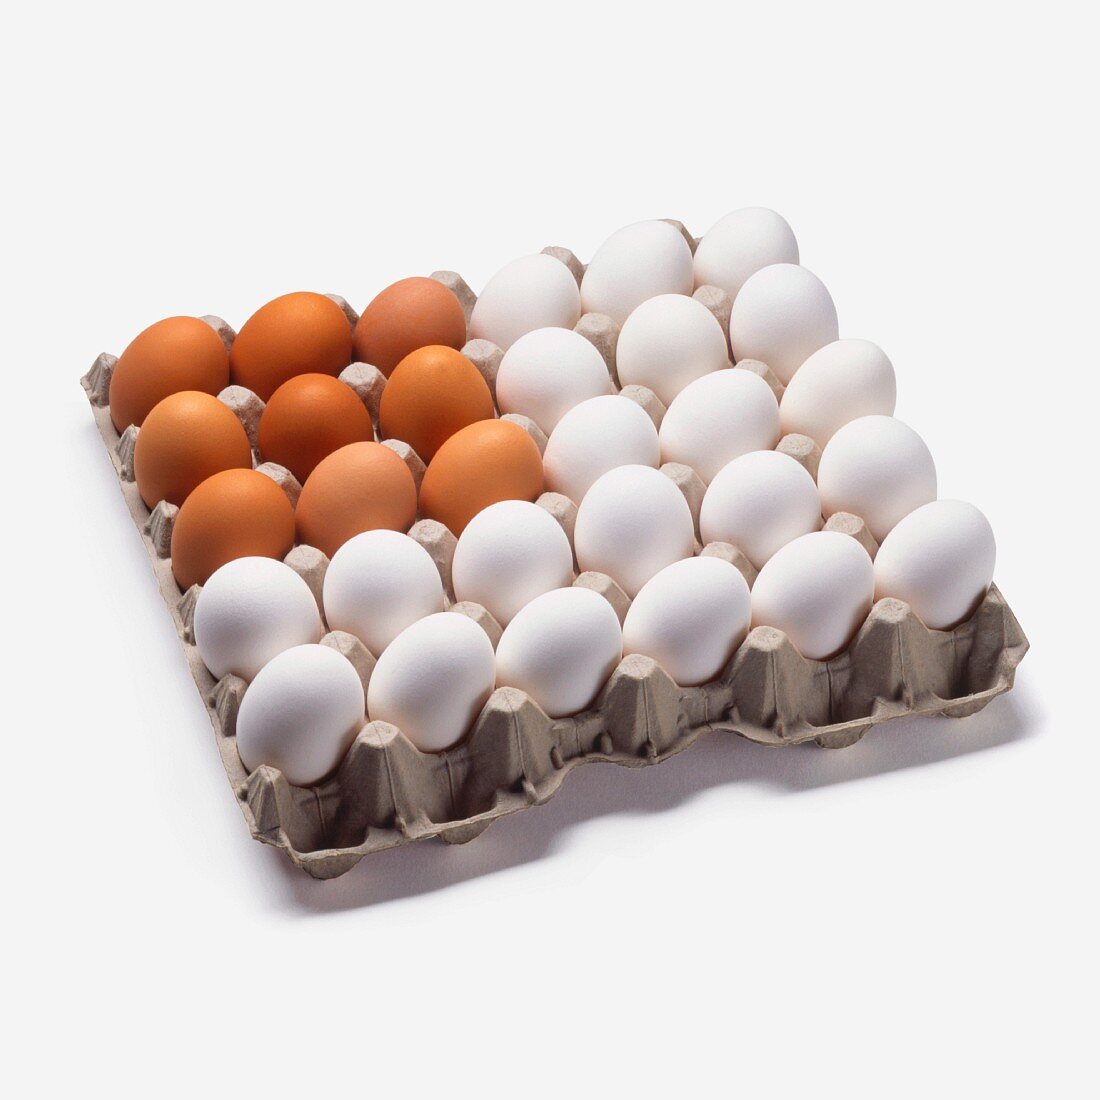 American Flag Eggs in Carton